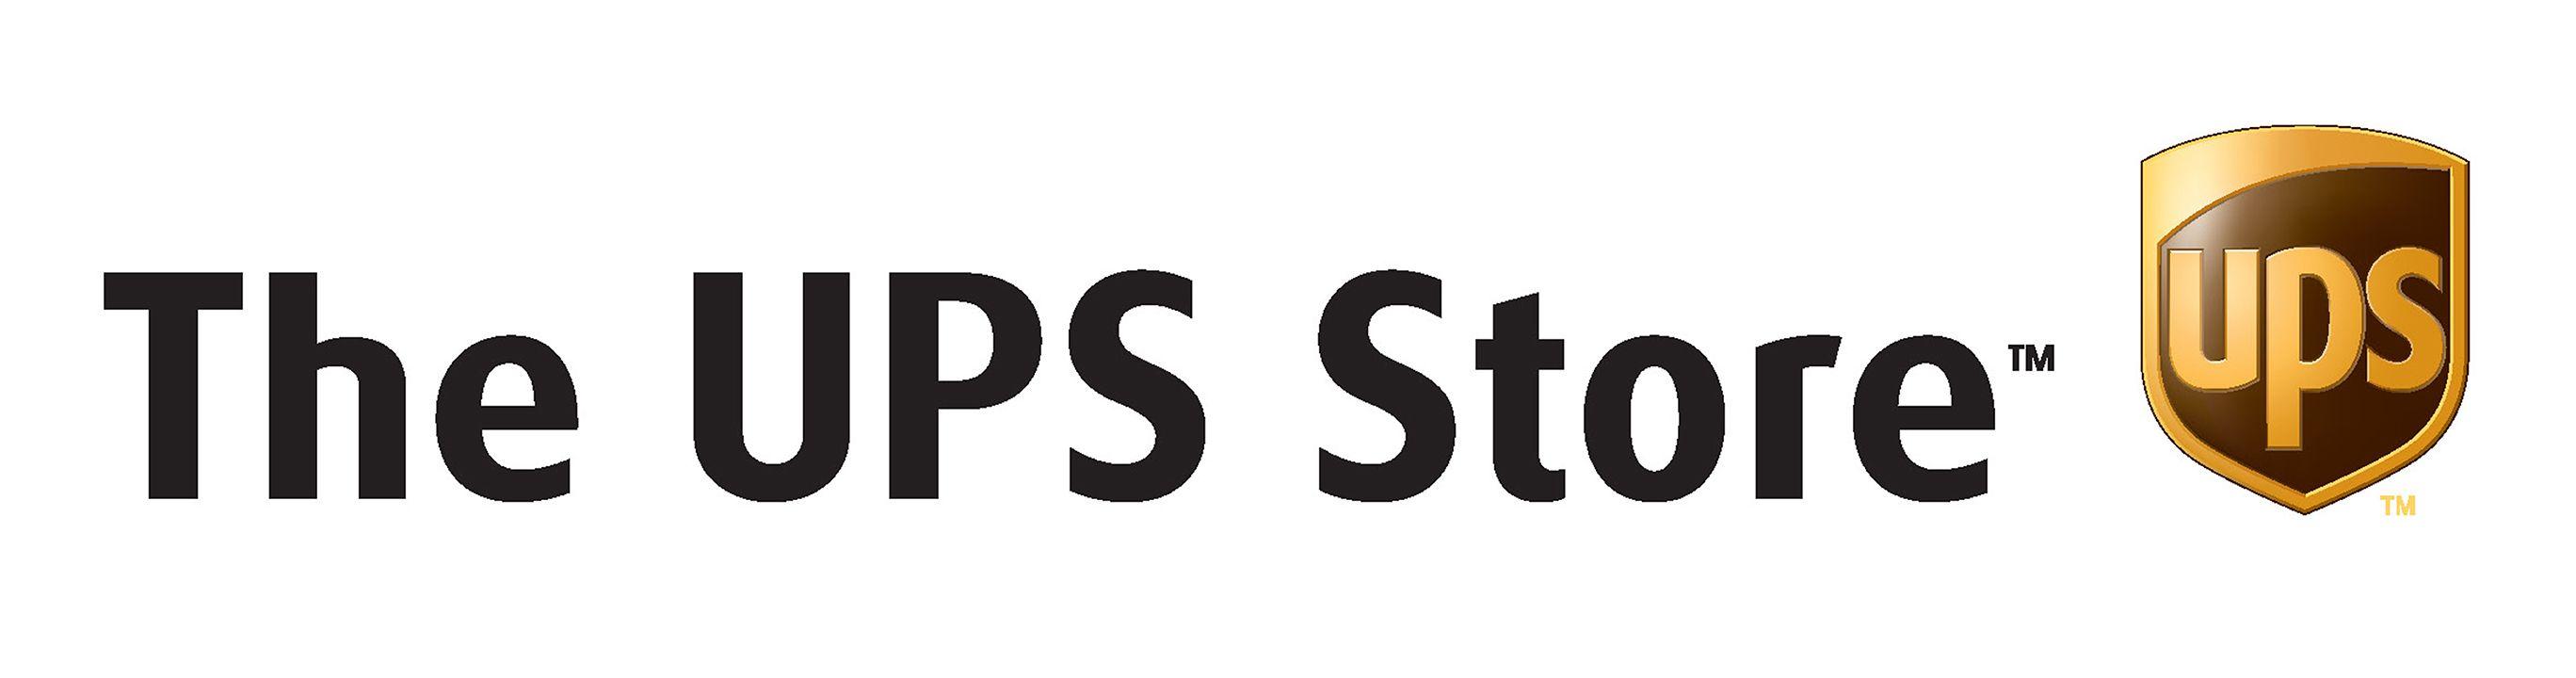 UPS Store Logo - The UPS Store - Montague BID